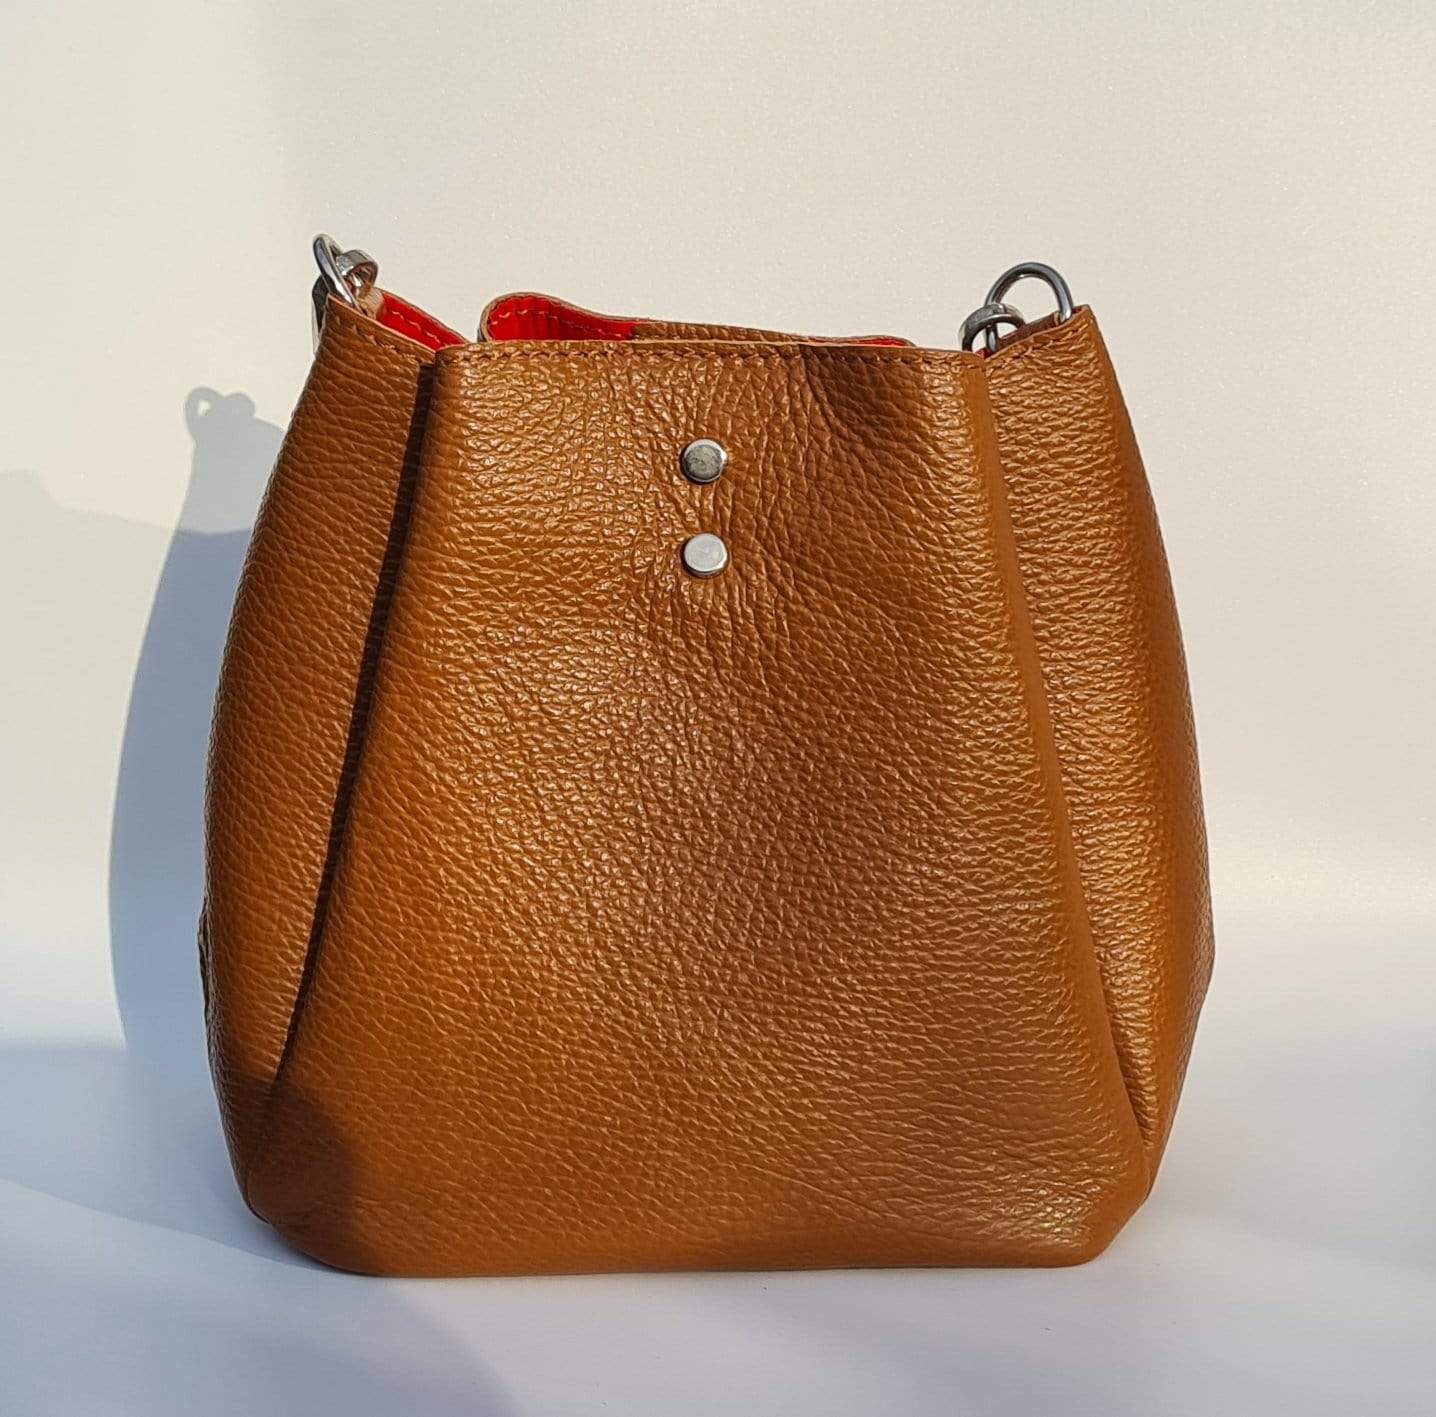 Small bucket bag in tan leather